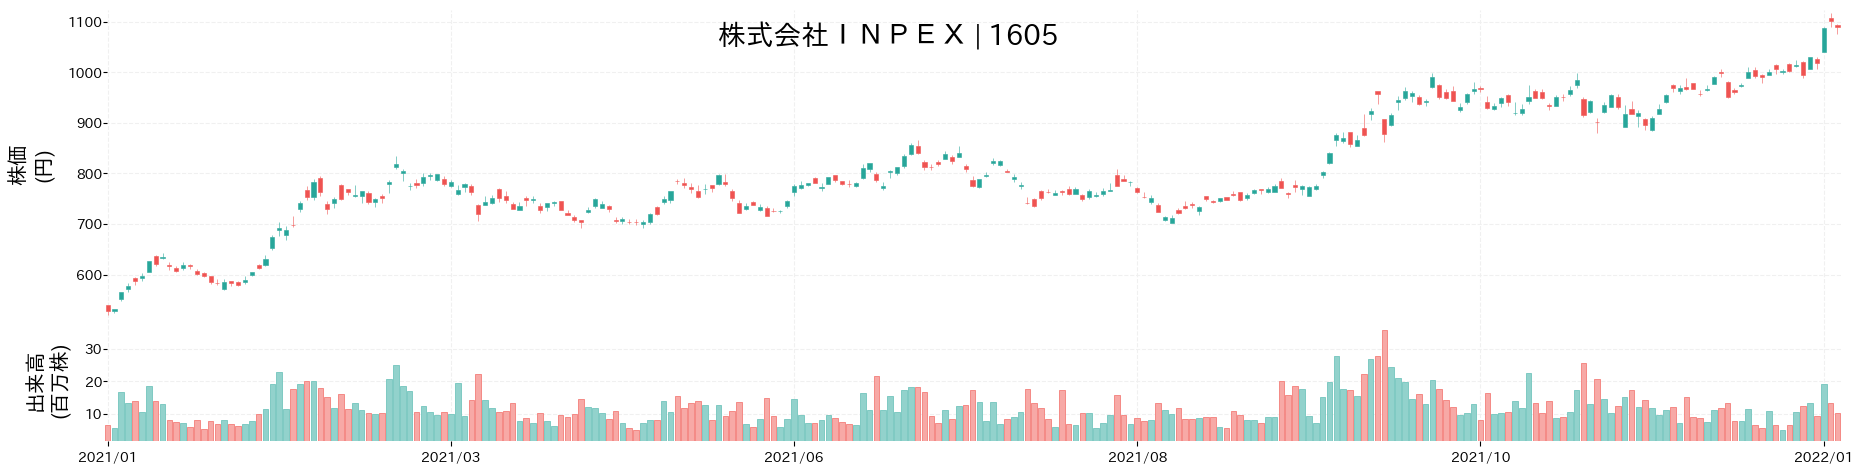 INPEXの株価推移(2021)